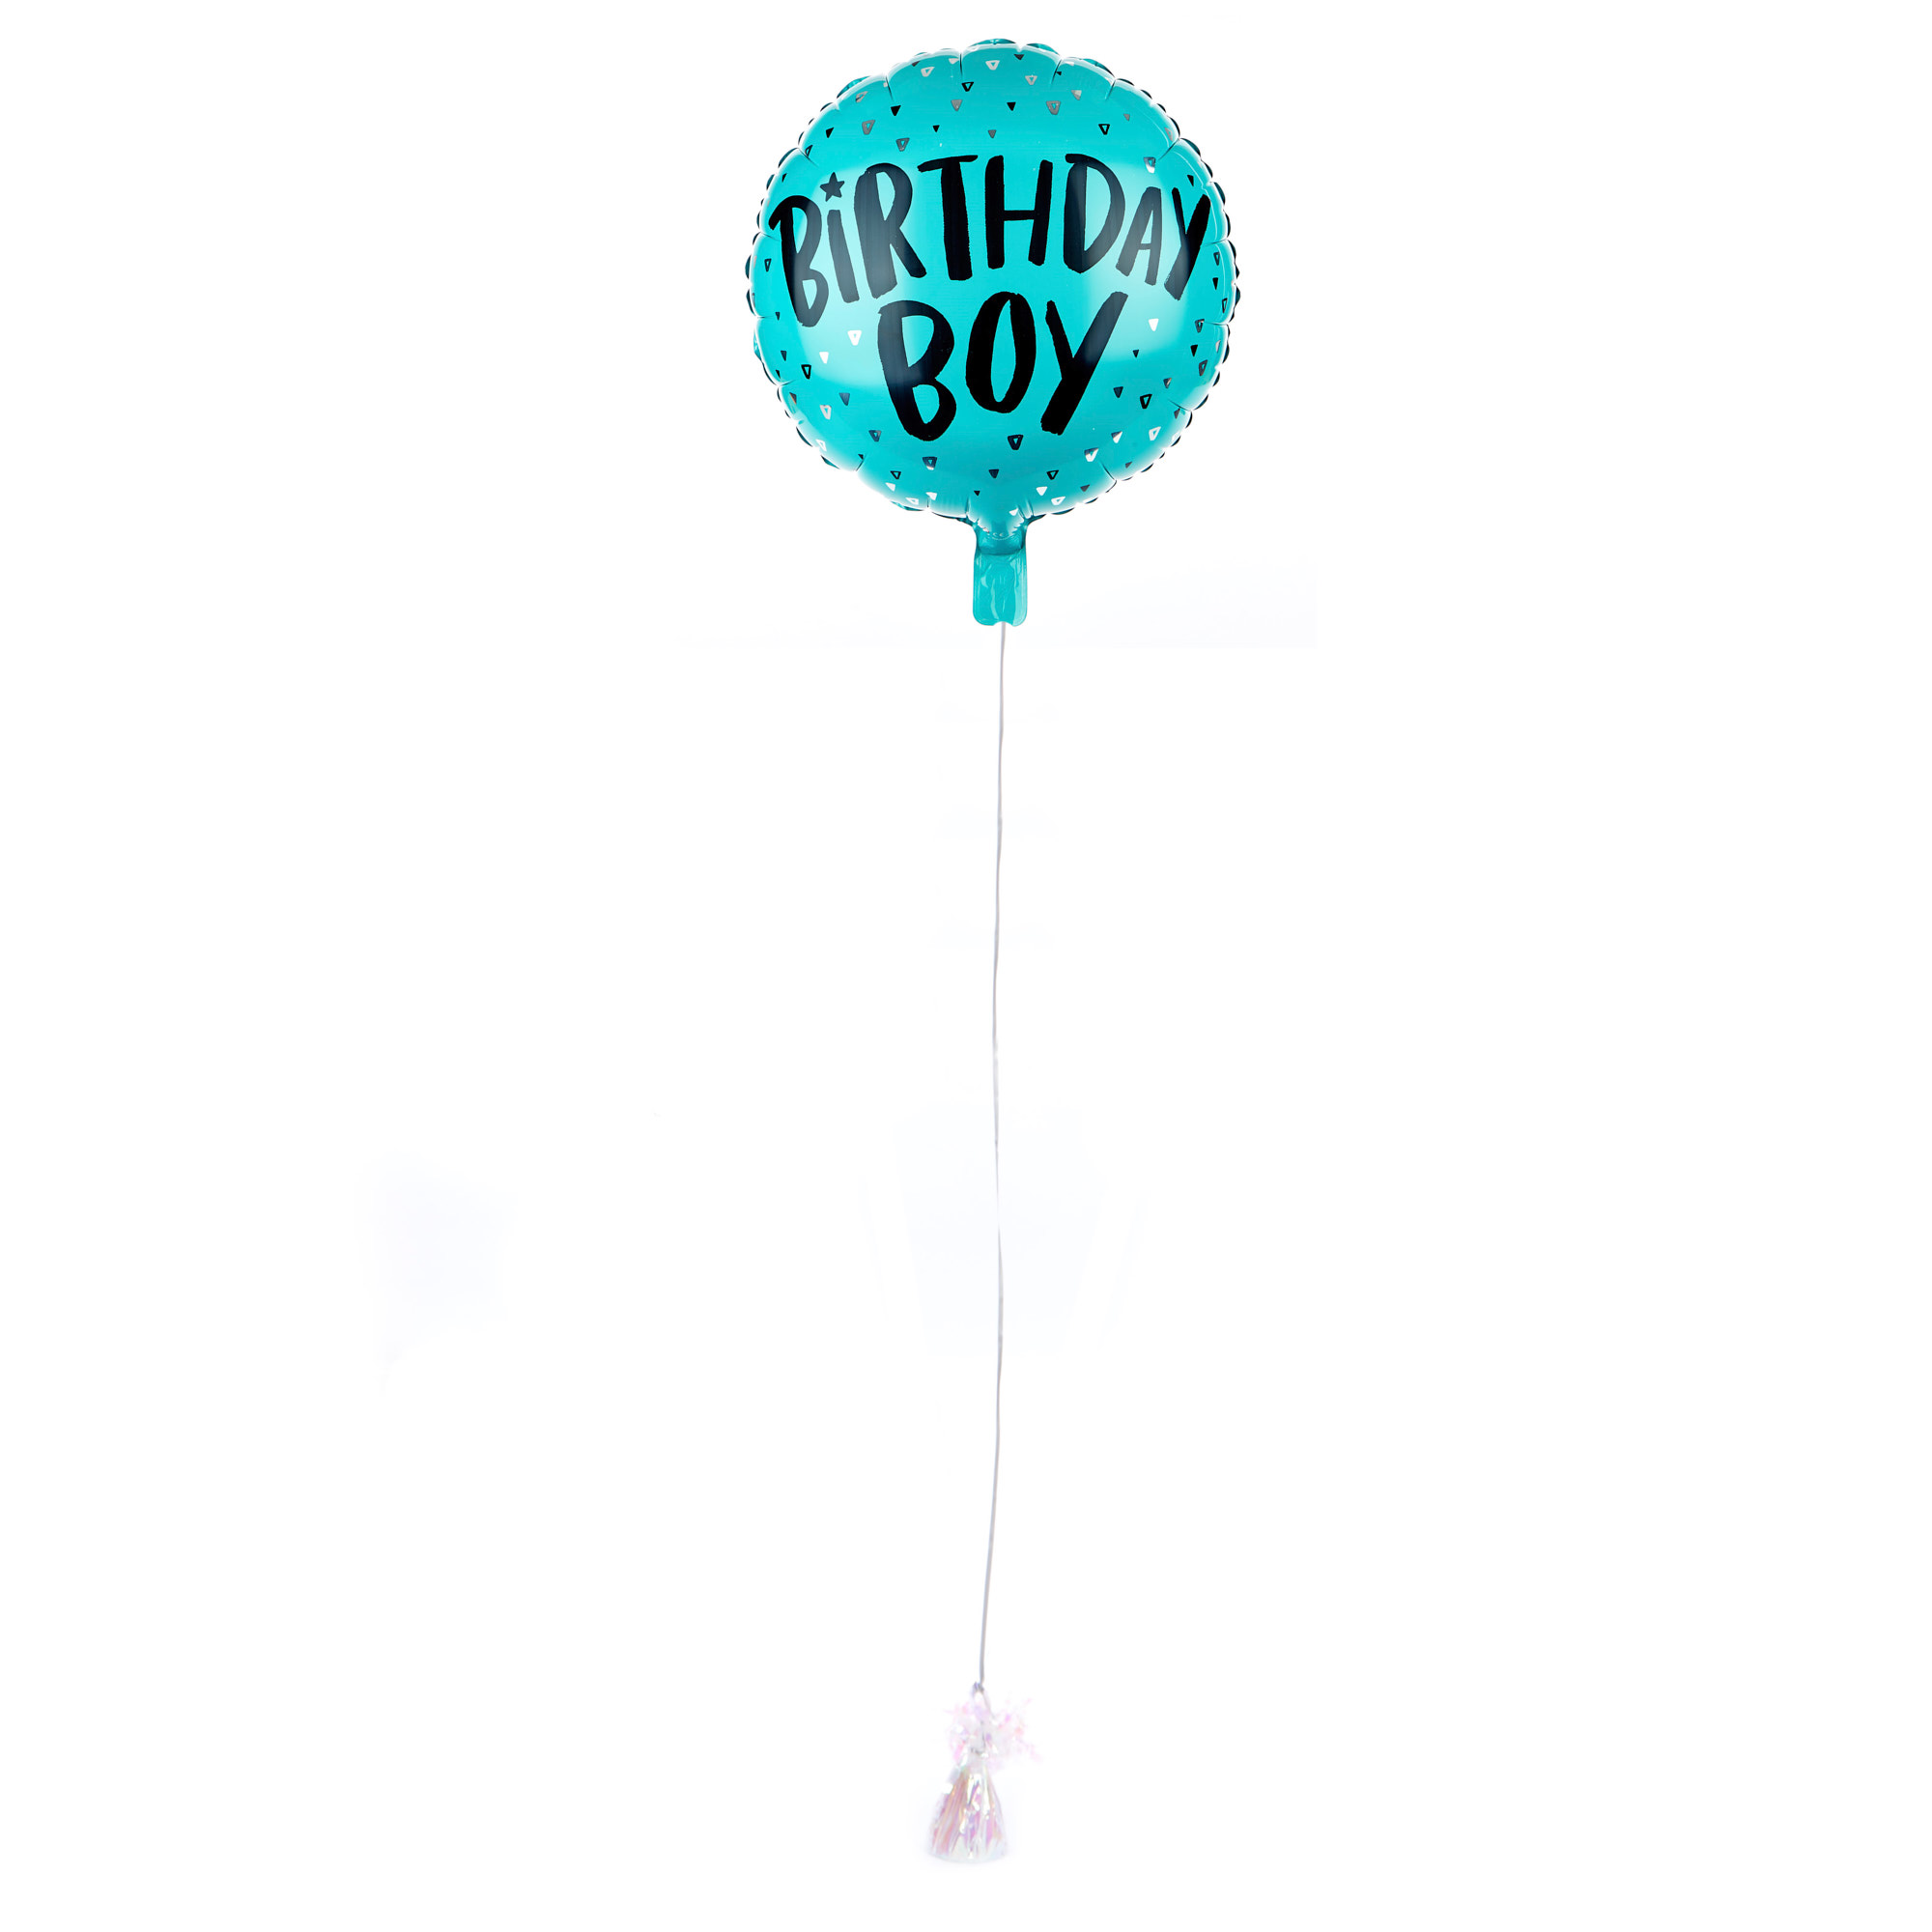 Birthday Boy Balloon Balloon & Lindt Chocolates - FREE GIFT CARD!